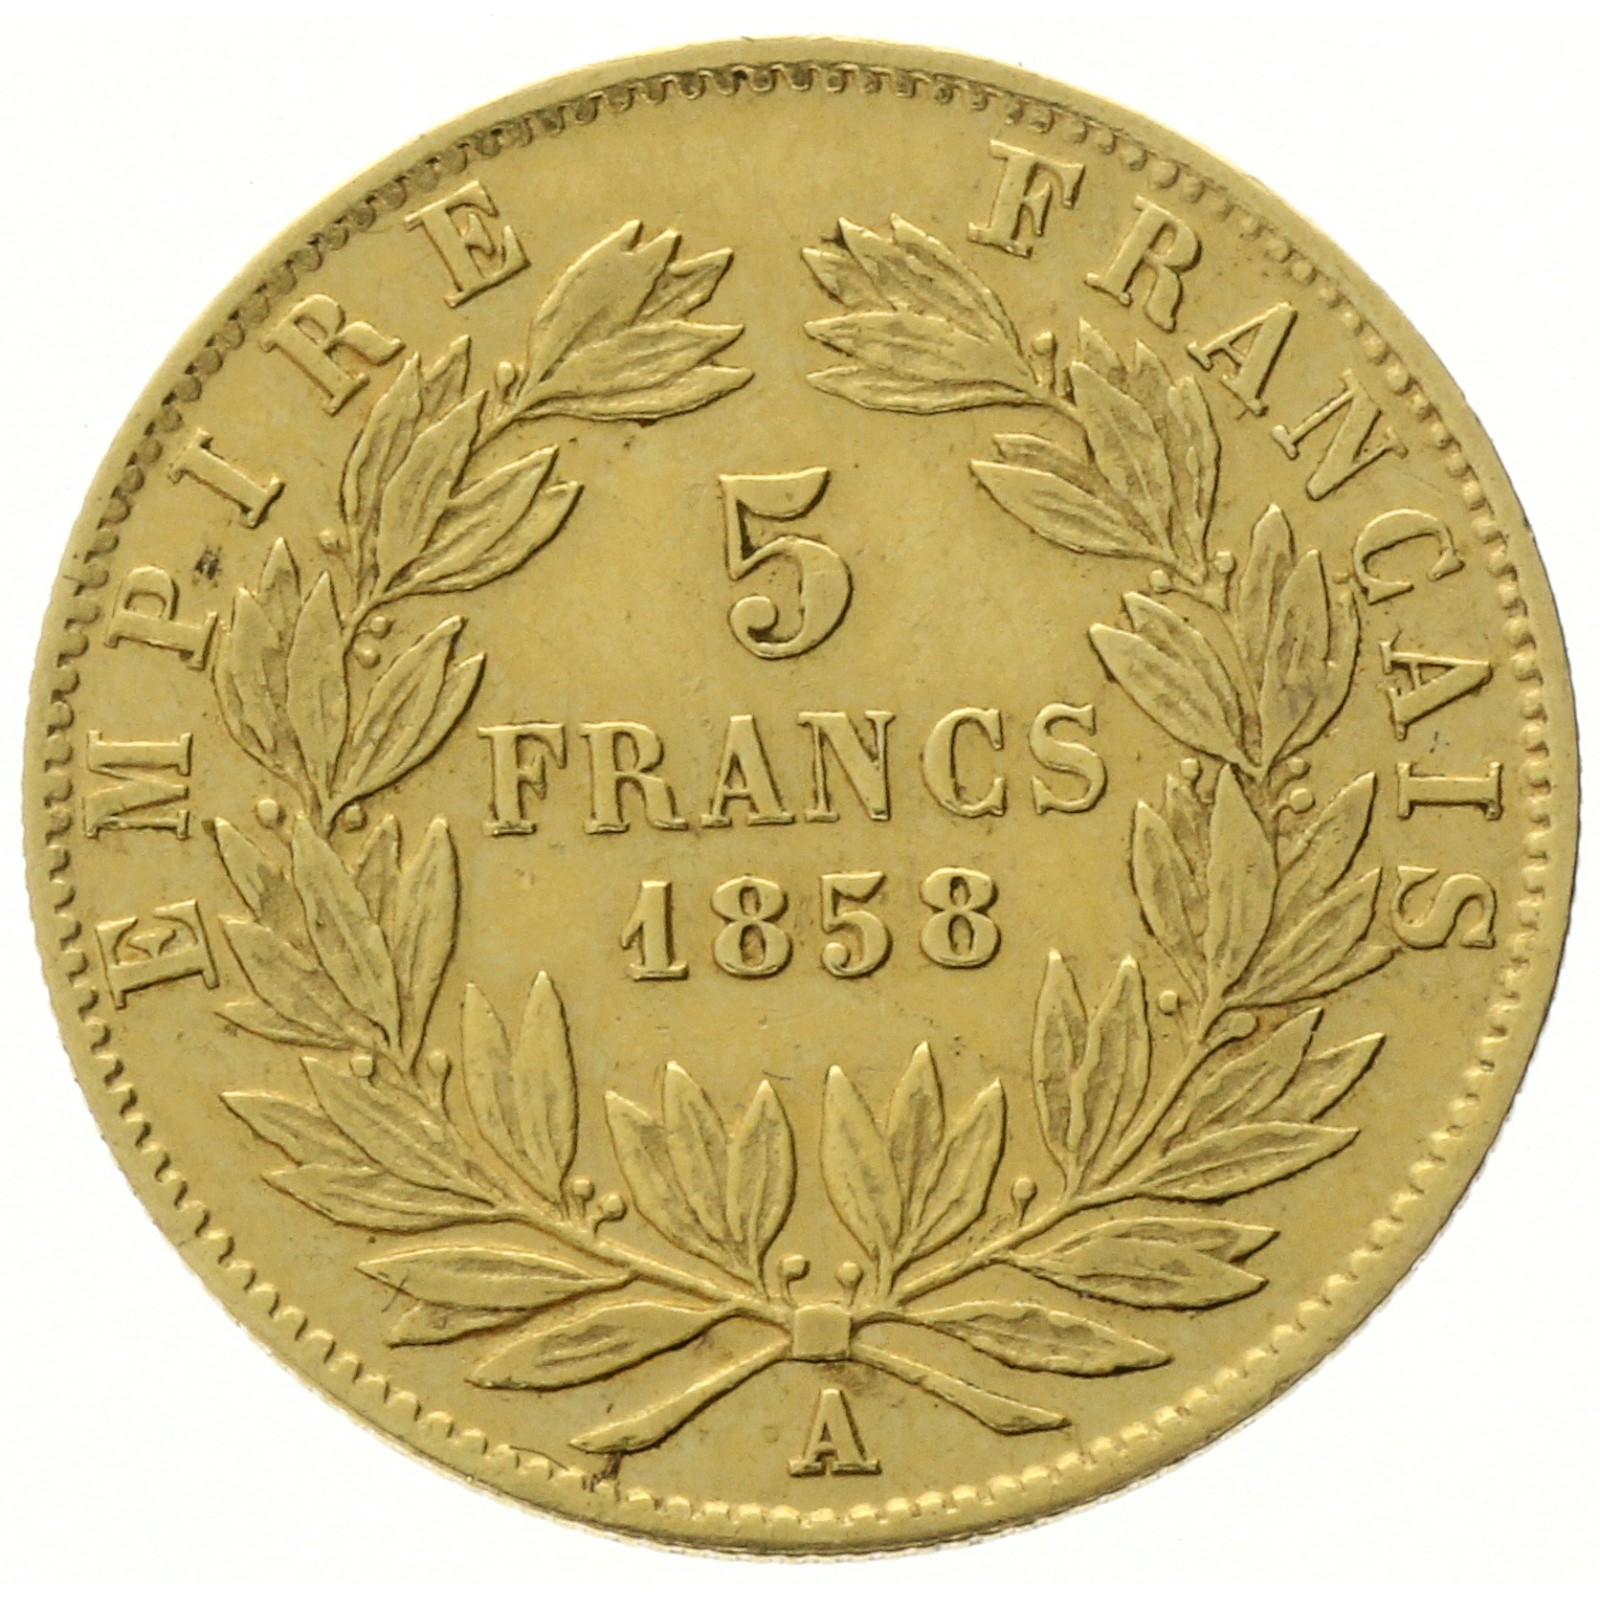 France - 5 francs - 1858 - Napoleon III